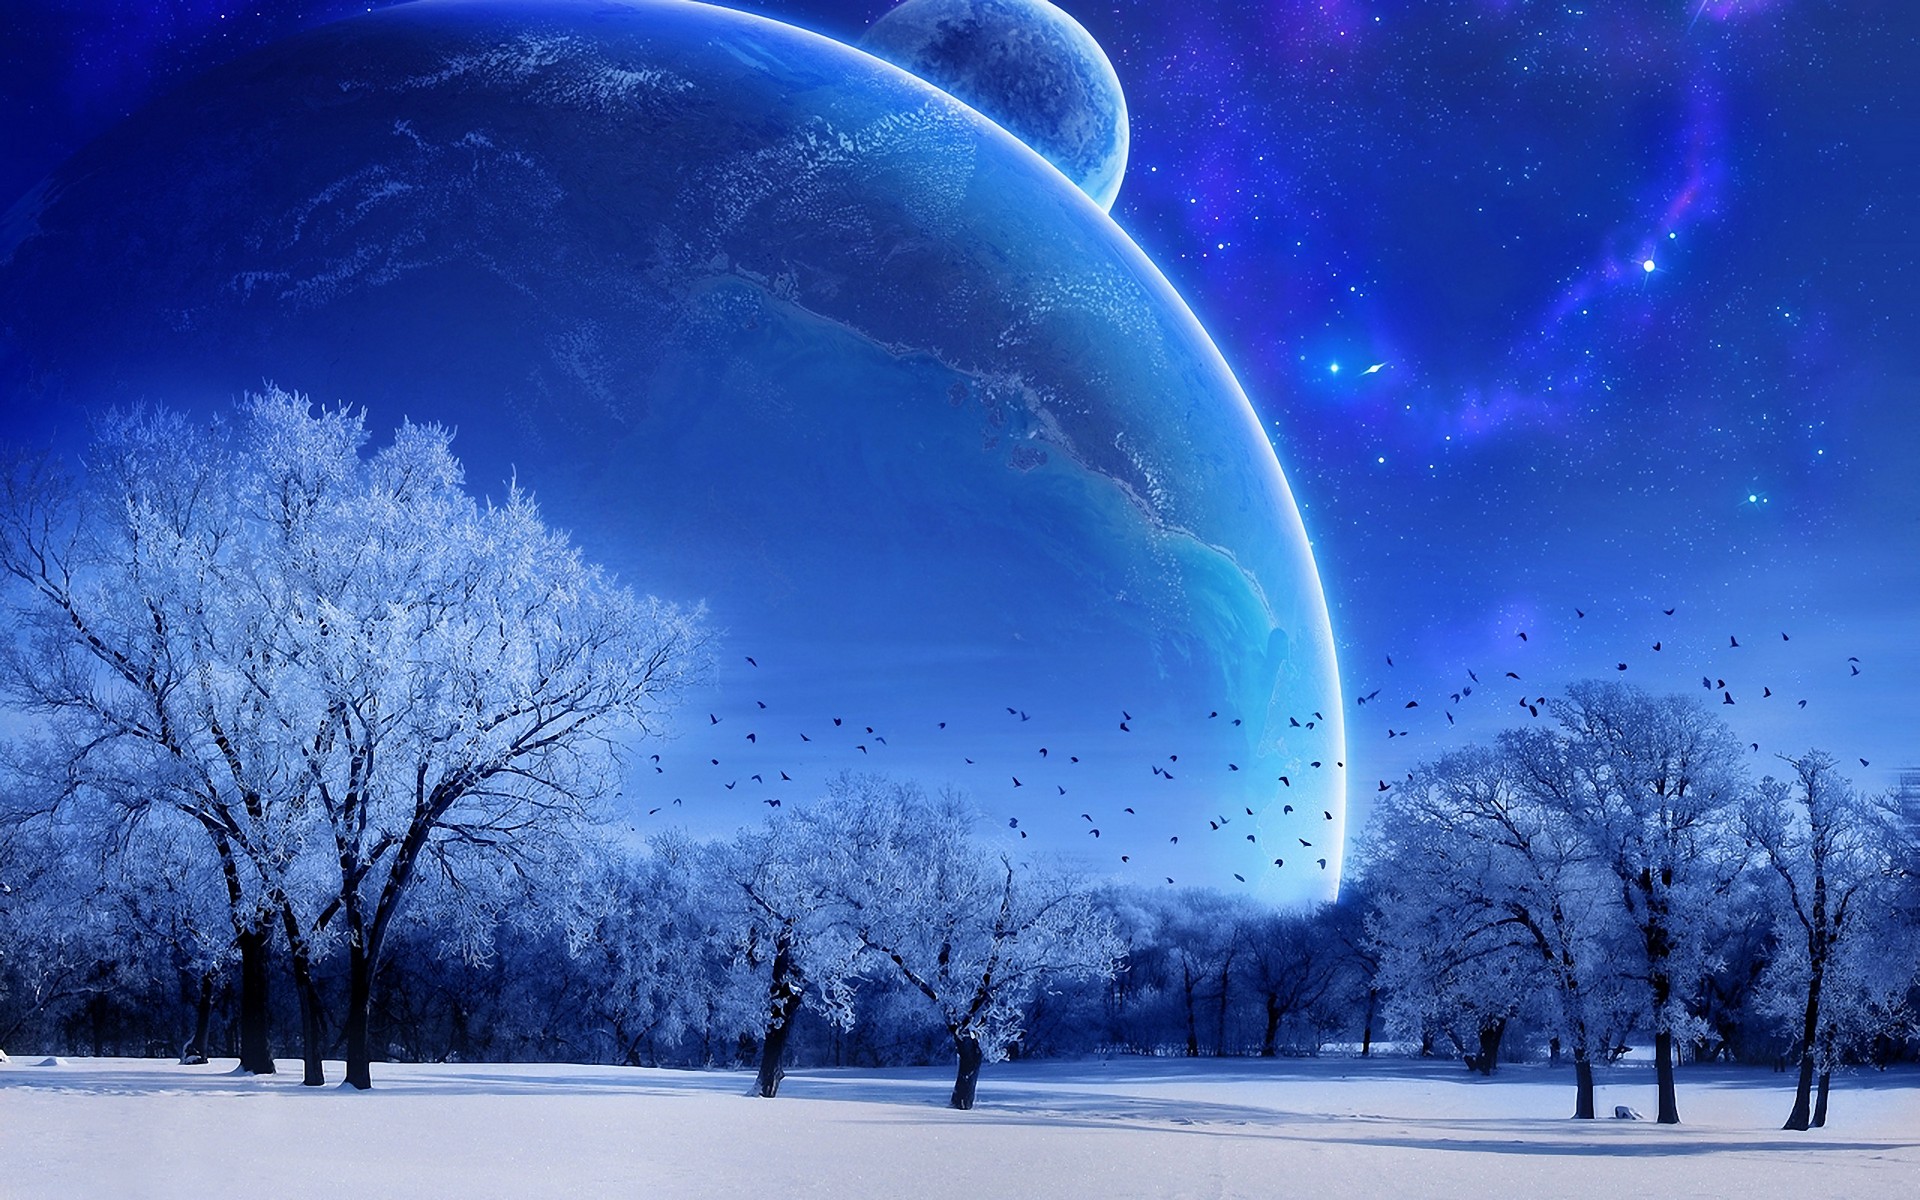 Winter Space Wallpaper Desktop Fantasy Ice Frozen Snow Covered Forest